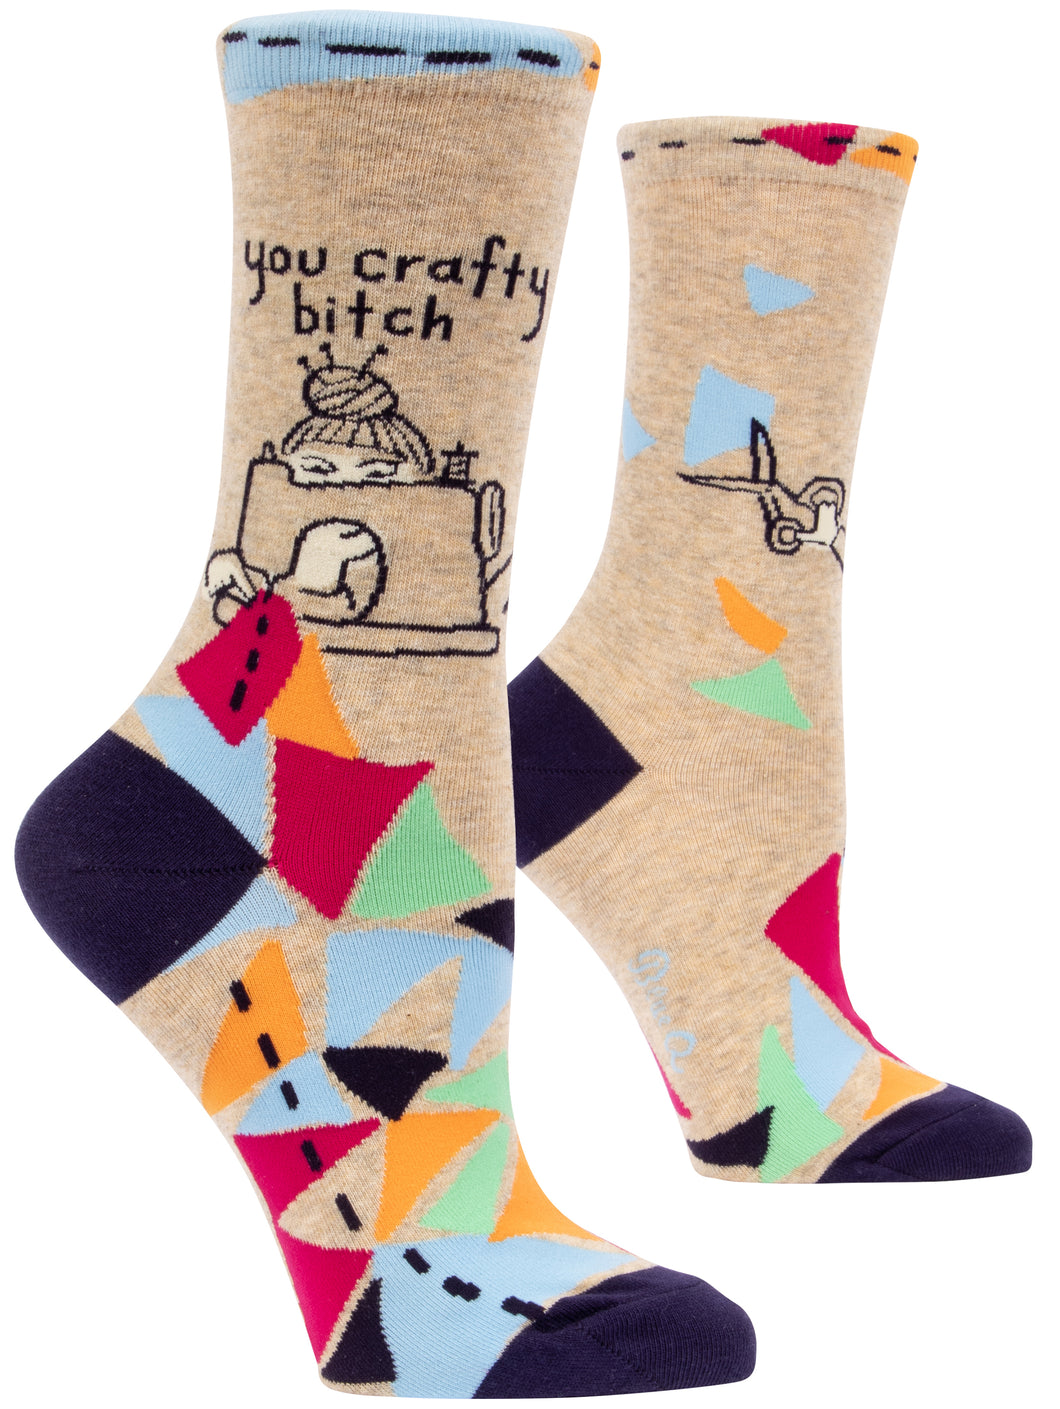 You Crafty B*tch - Women's Crew Socks